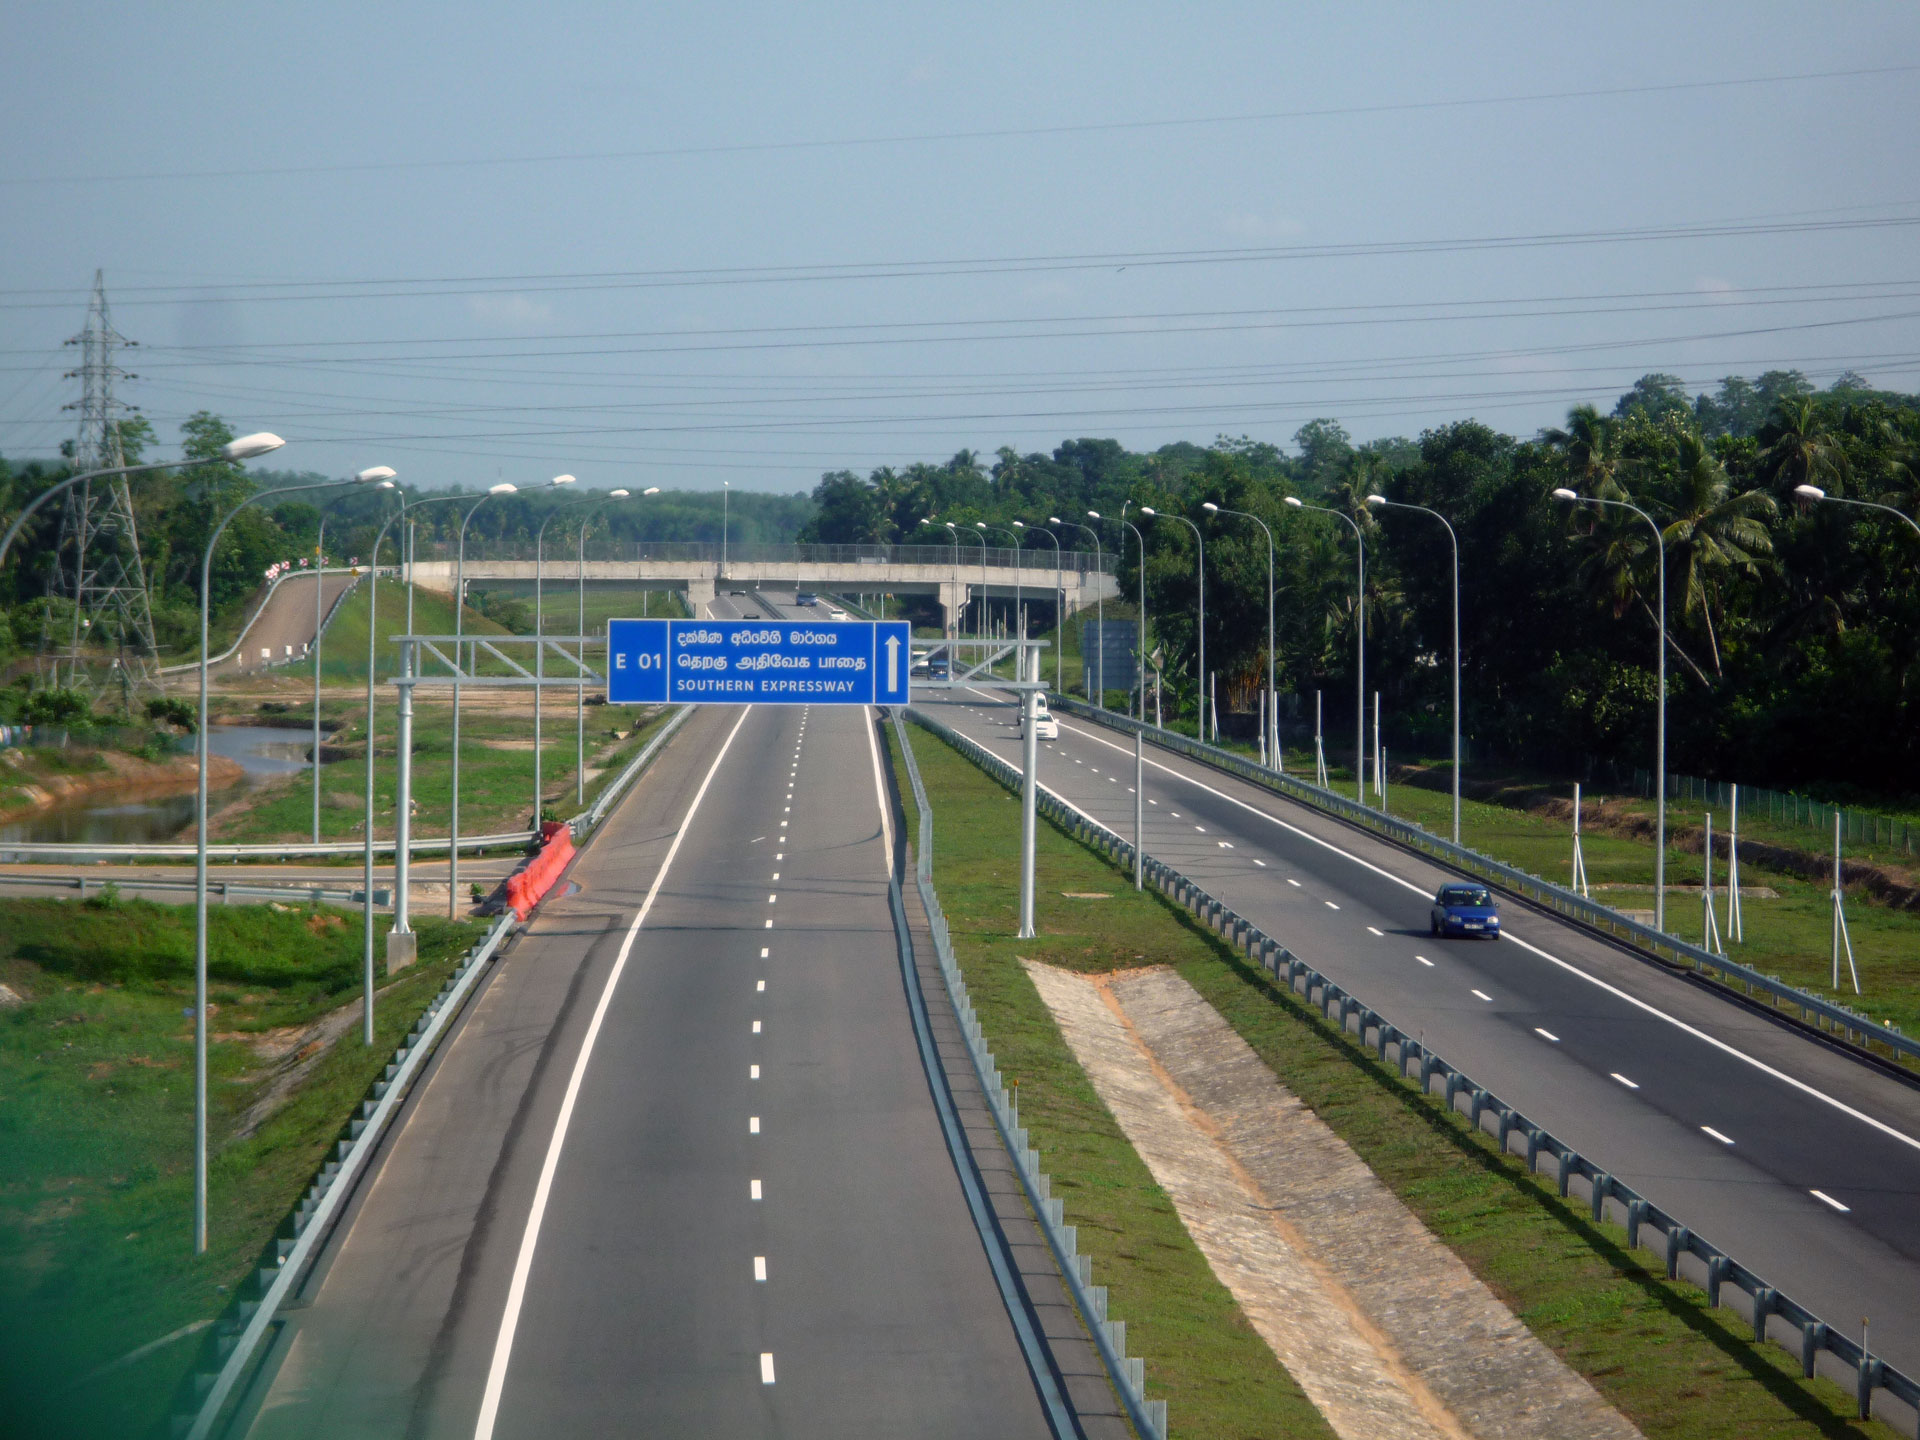 Sri Lanka – Southern Expressway (E01)